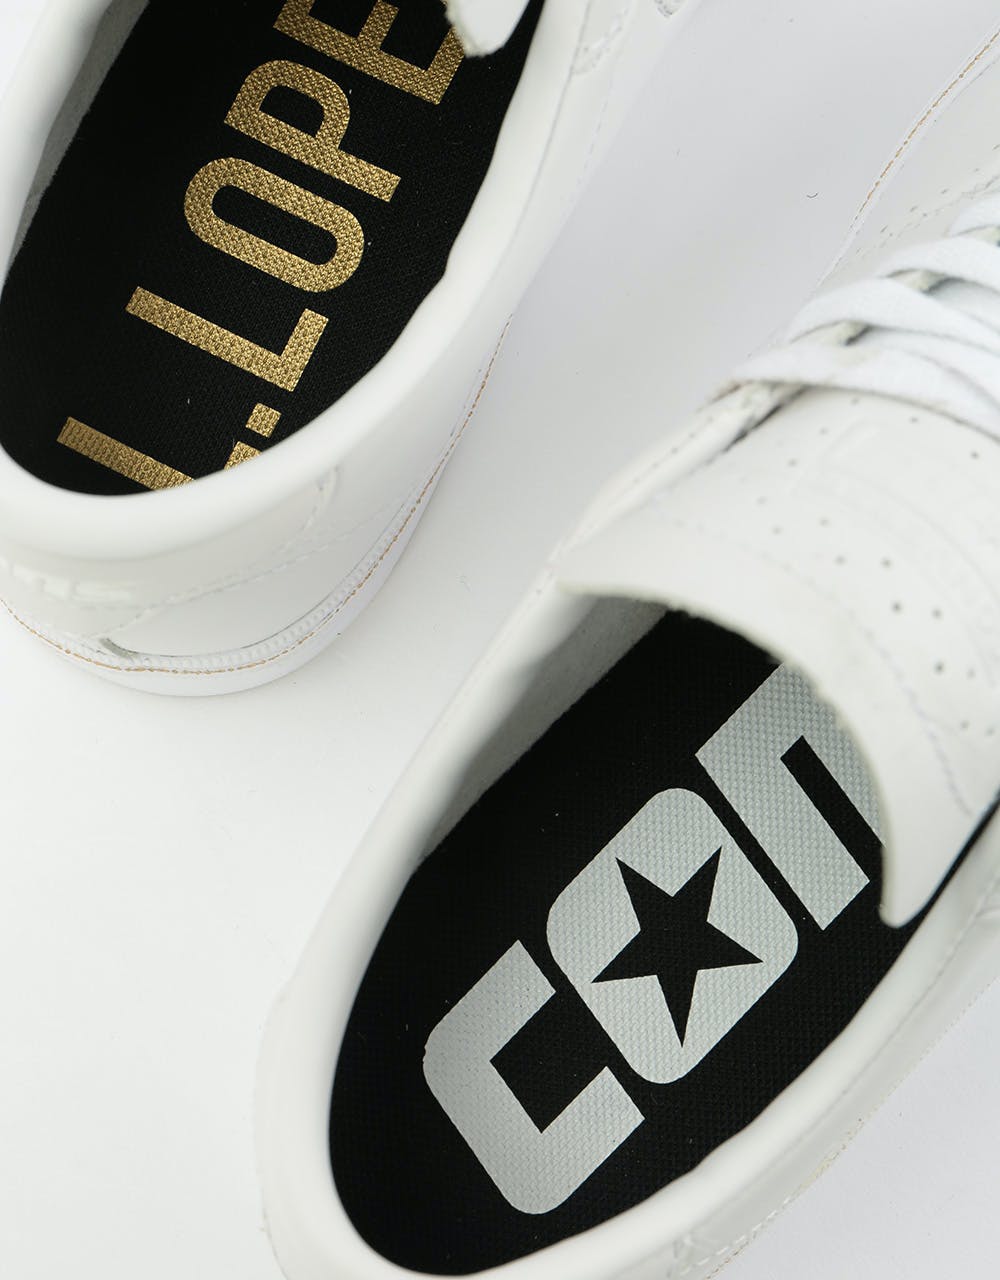 Converse Louie Lopez Pro Ox Leather Skate Shoes - White/White/White